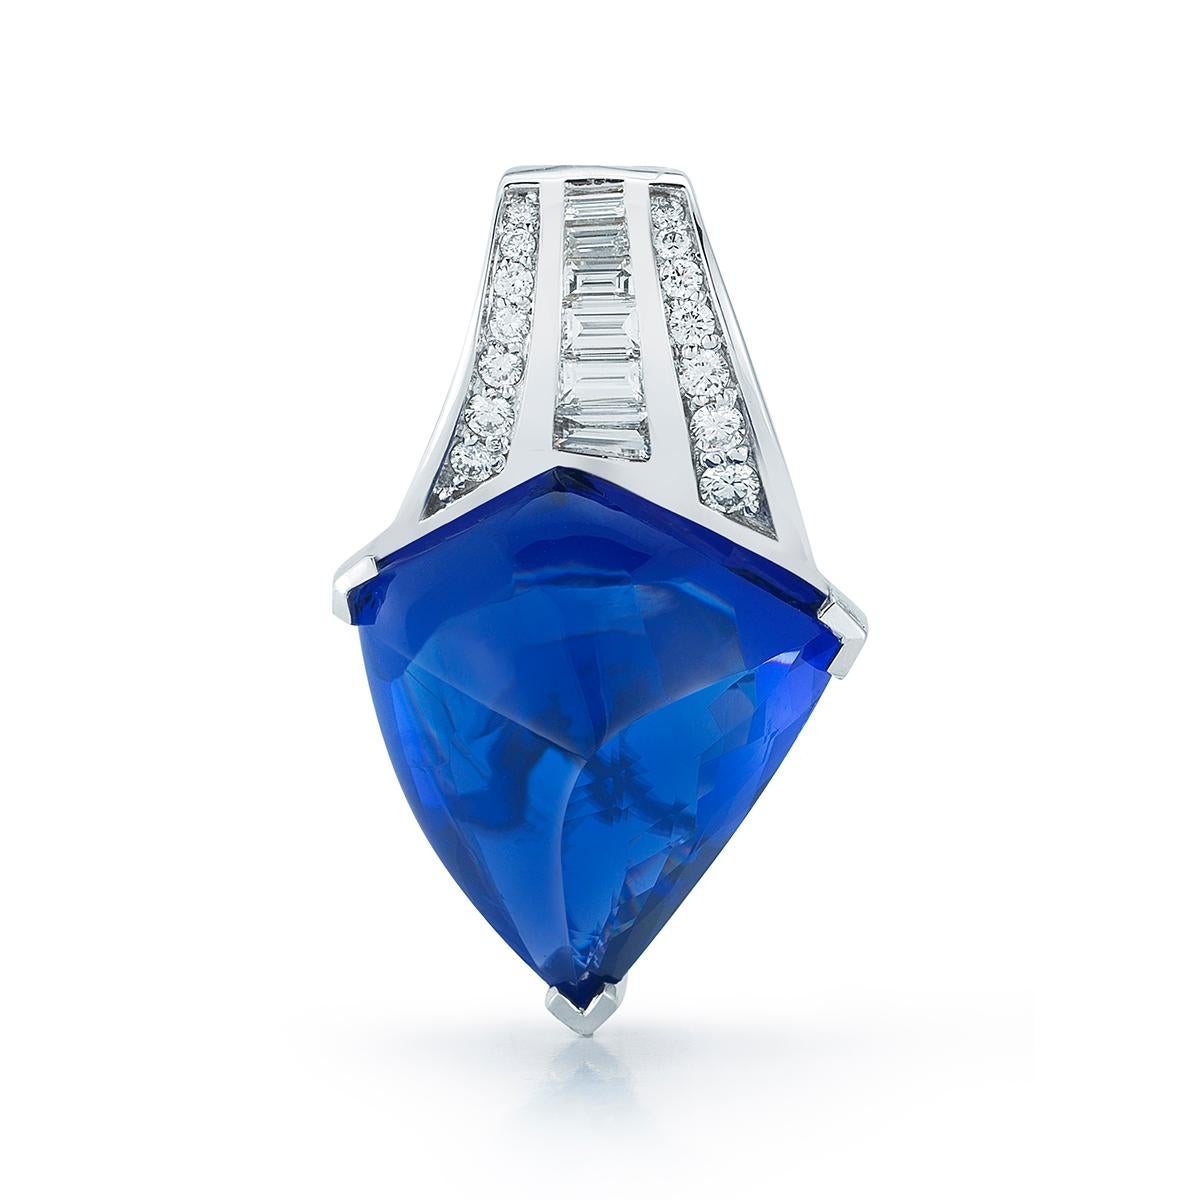 A uniquely cut tanzanite shines in an asymmetrical diamond slide pendant.
Item:	# 01662
Setting:	18K W
Color Weight:	30.75 ct. of Tanzanite
Diamond Weight:	0.85 ct. of Diamonds